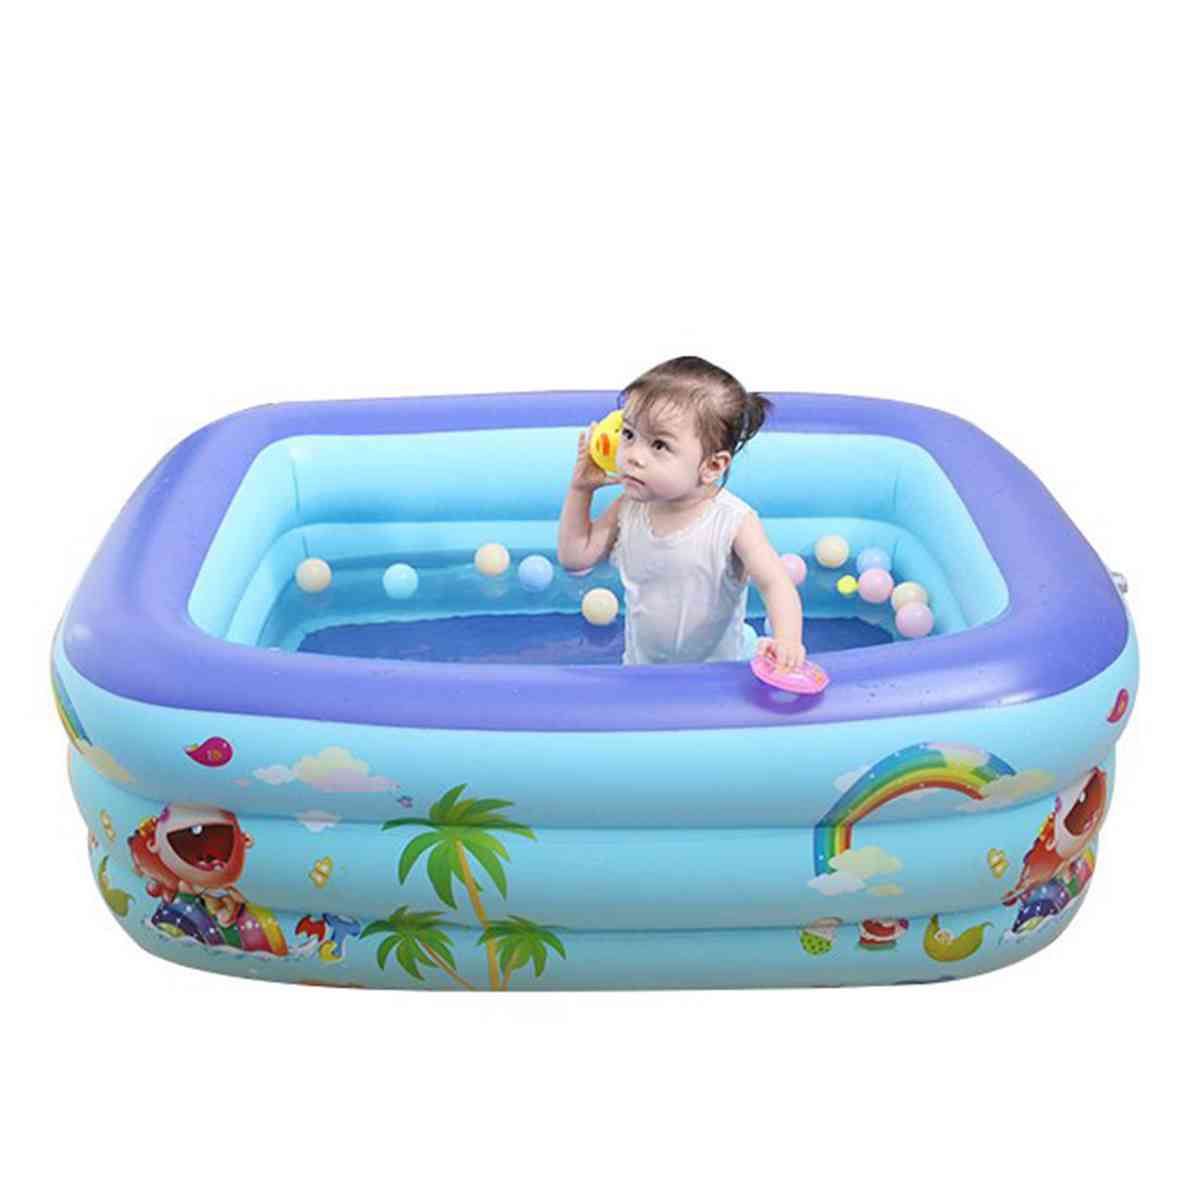 120/130150cm Inflatable Swimming Pool - Baby Bathing Tub